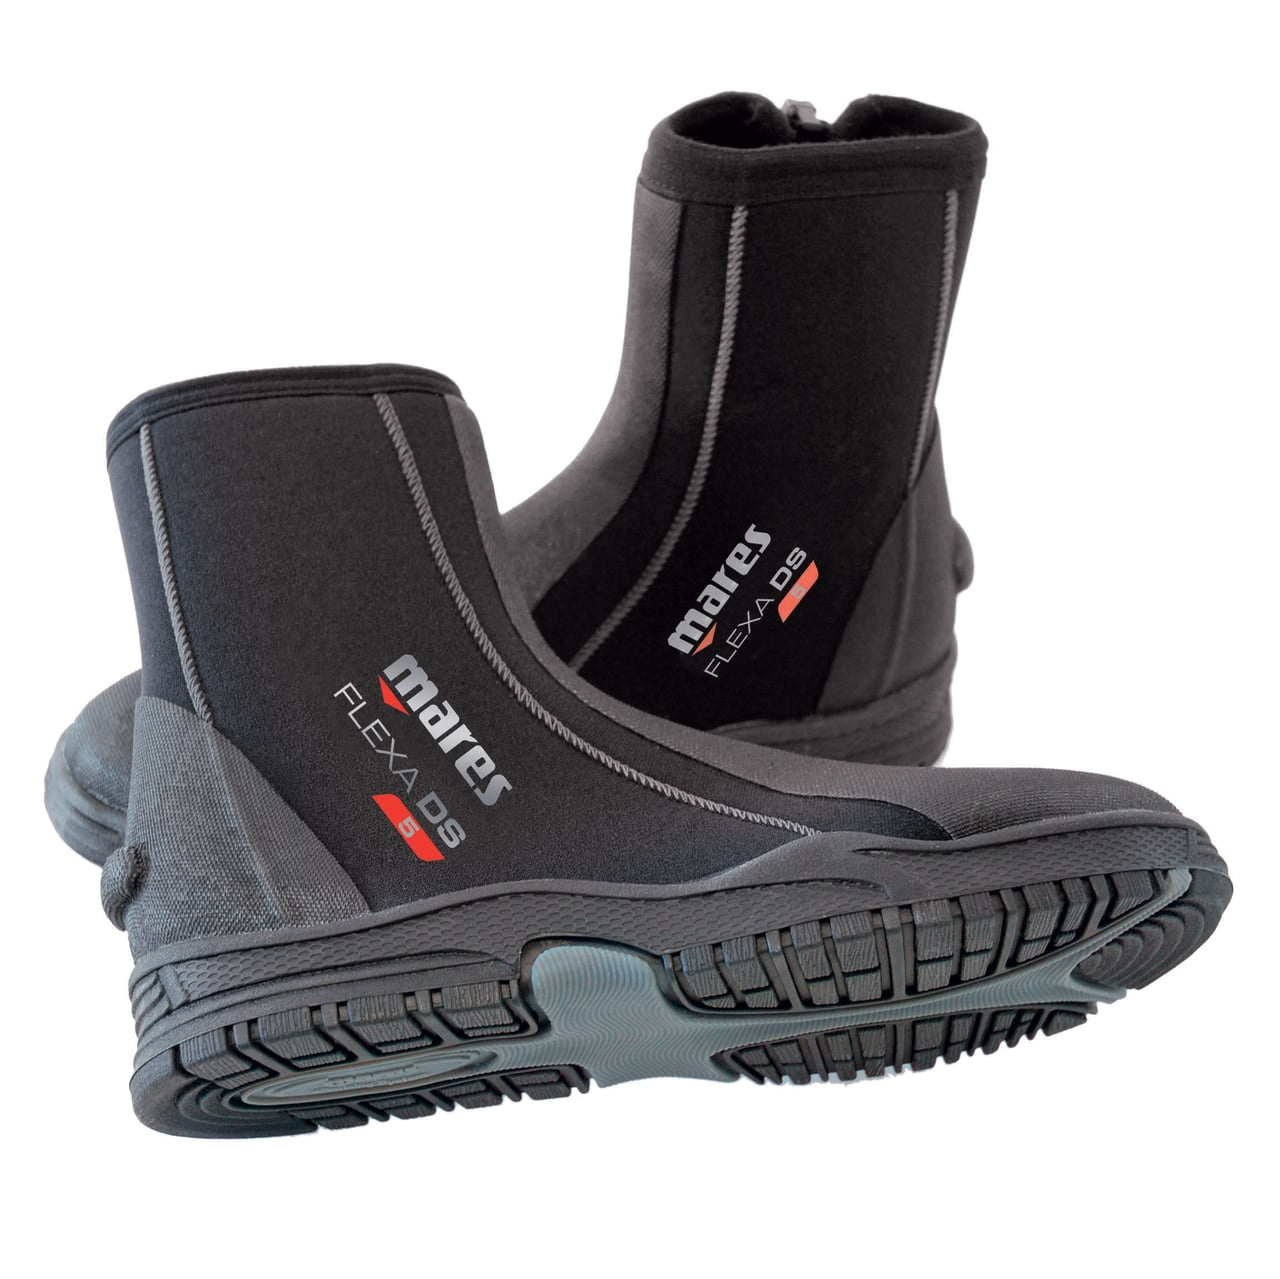 Mares Trilastic Scuba Diving Water Sport 5mm Neoprene Booties Dive Shoes Boots 